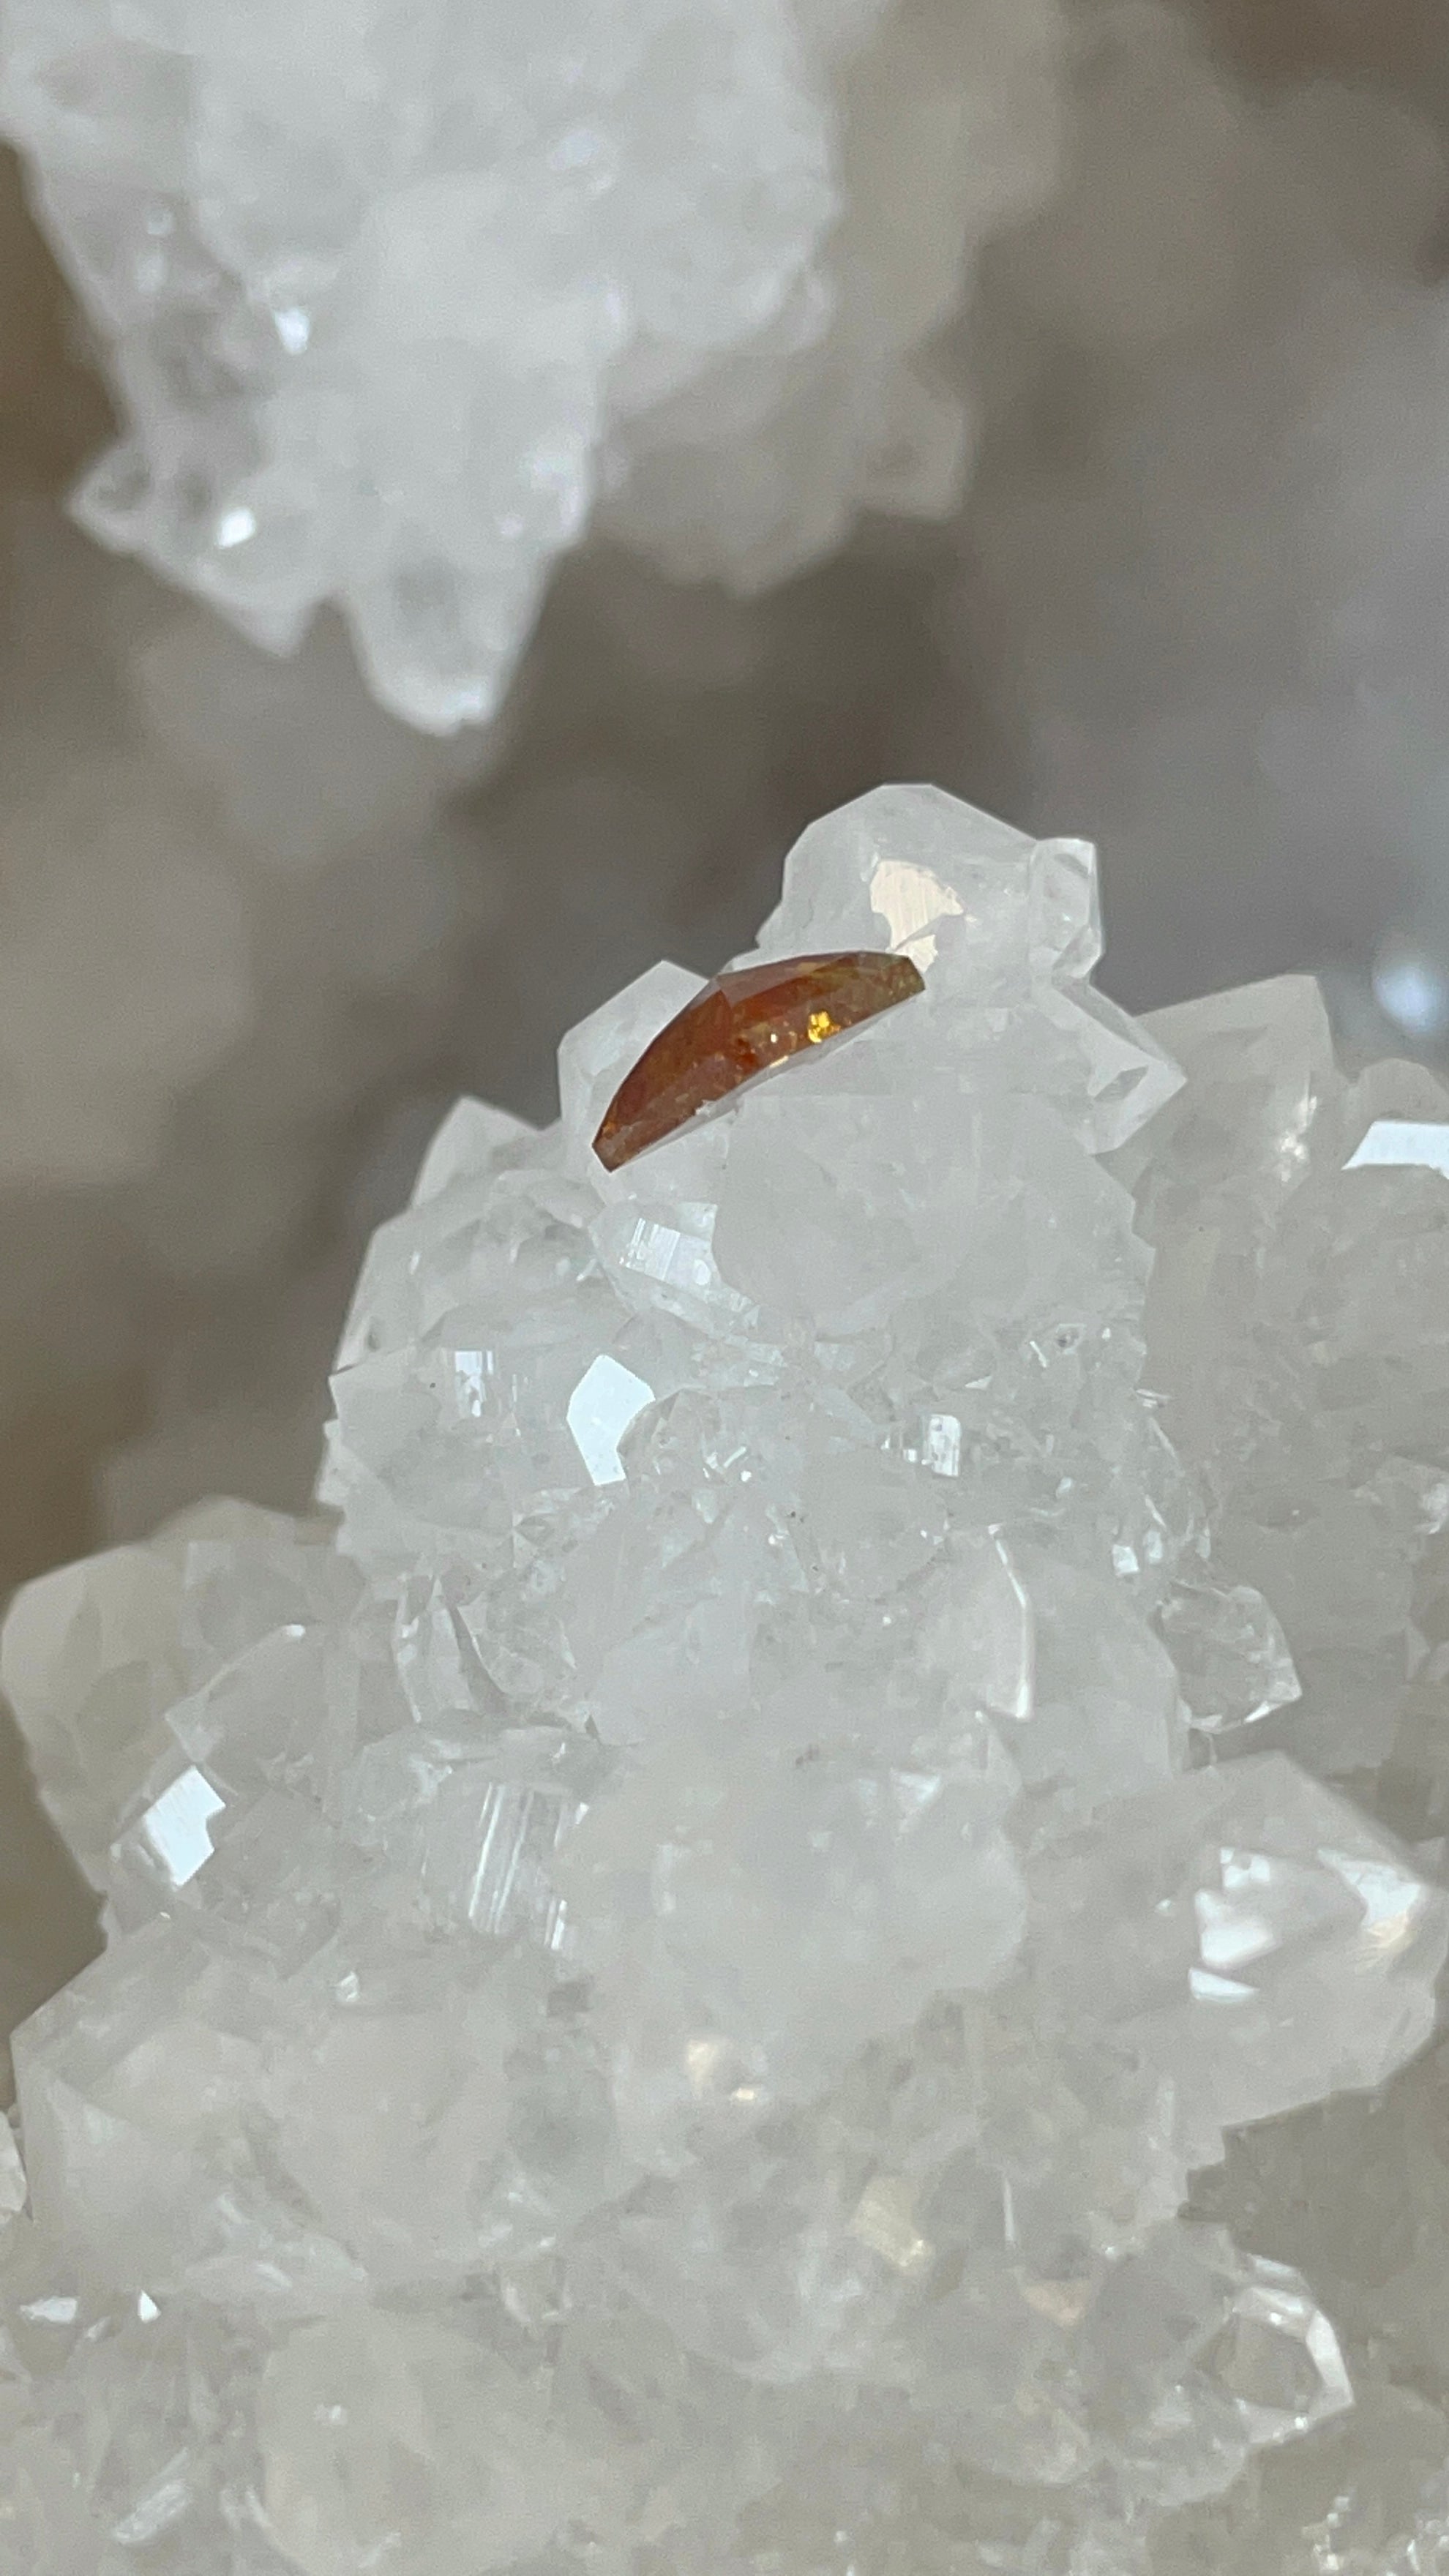 Diamond .82 CT Rusty Salt and Pepper Diamond-Flat Bottom Cut